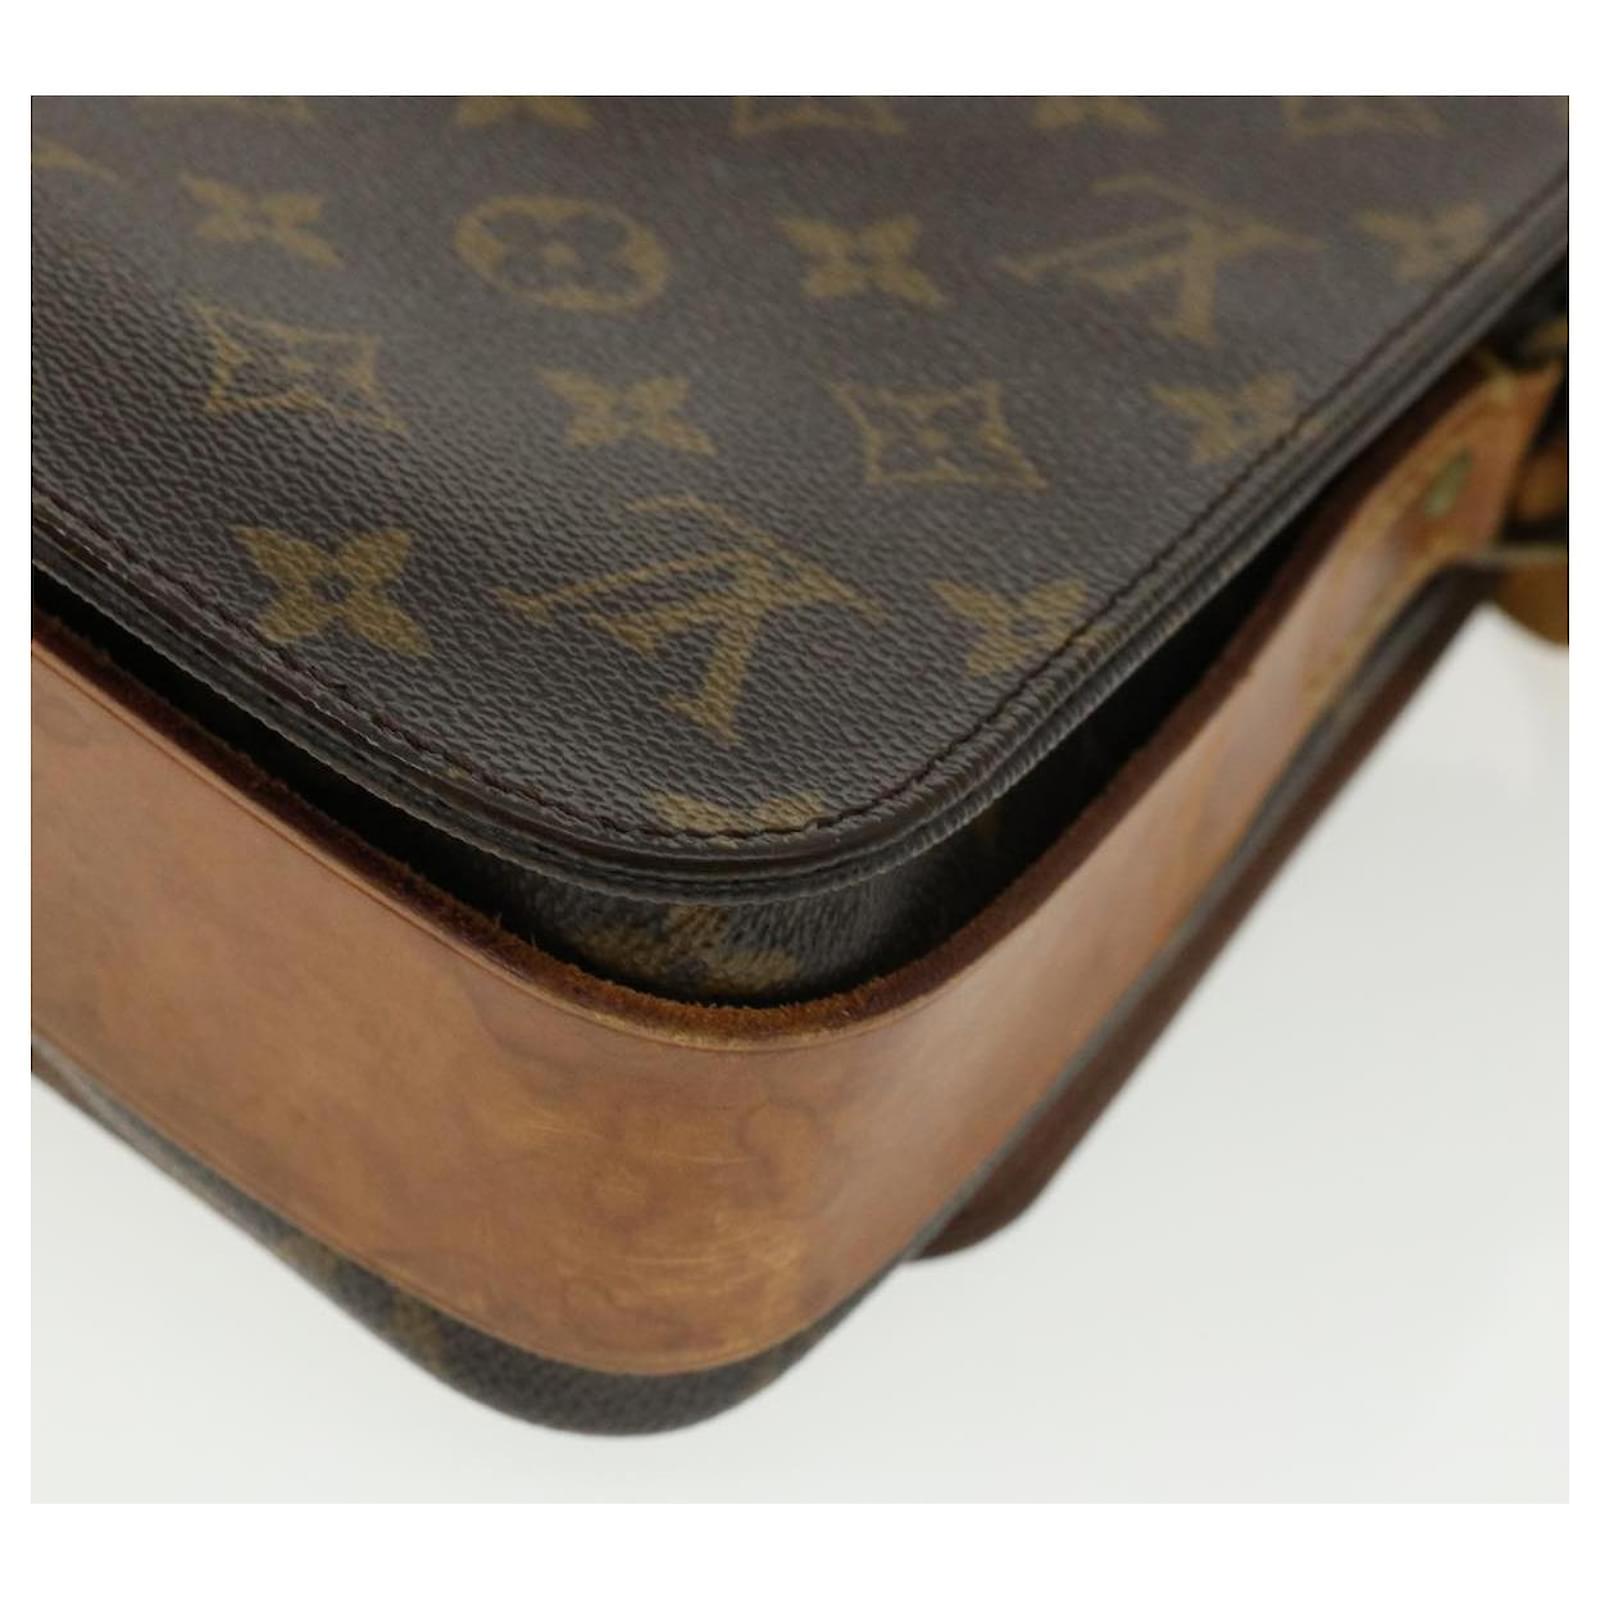 🌹SOLD🌹 $525 SHIPPED Louis Vuitton Cartouchiere MM Monogram